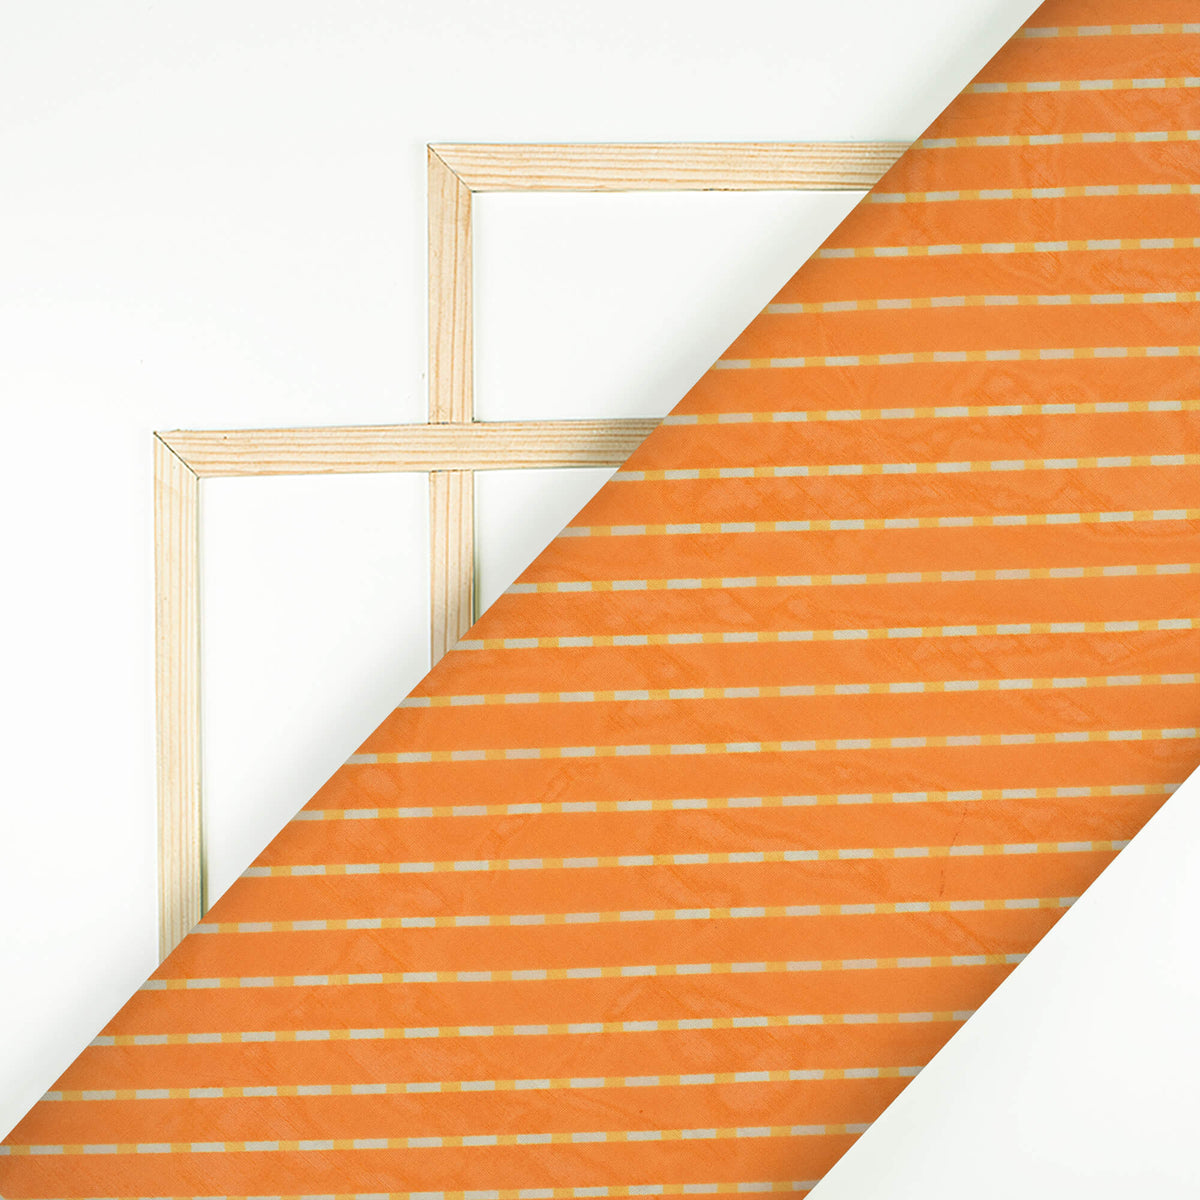 Carrot Orange And White Leheriya Pattern Digital Print Organza Fabric